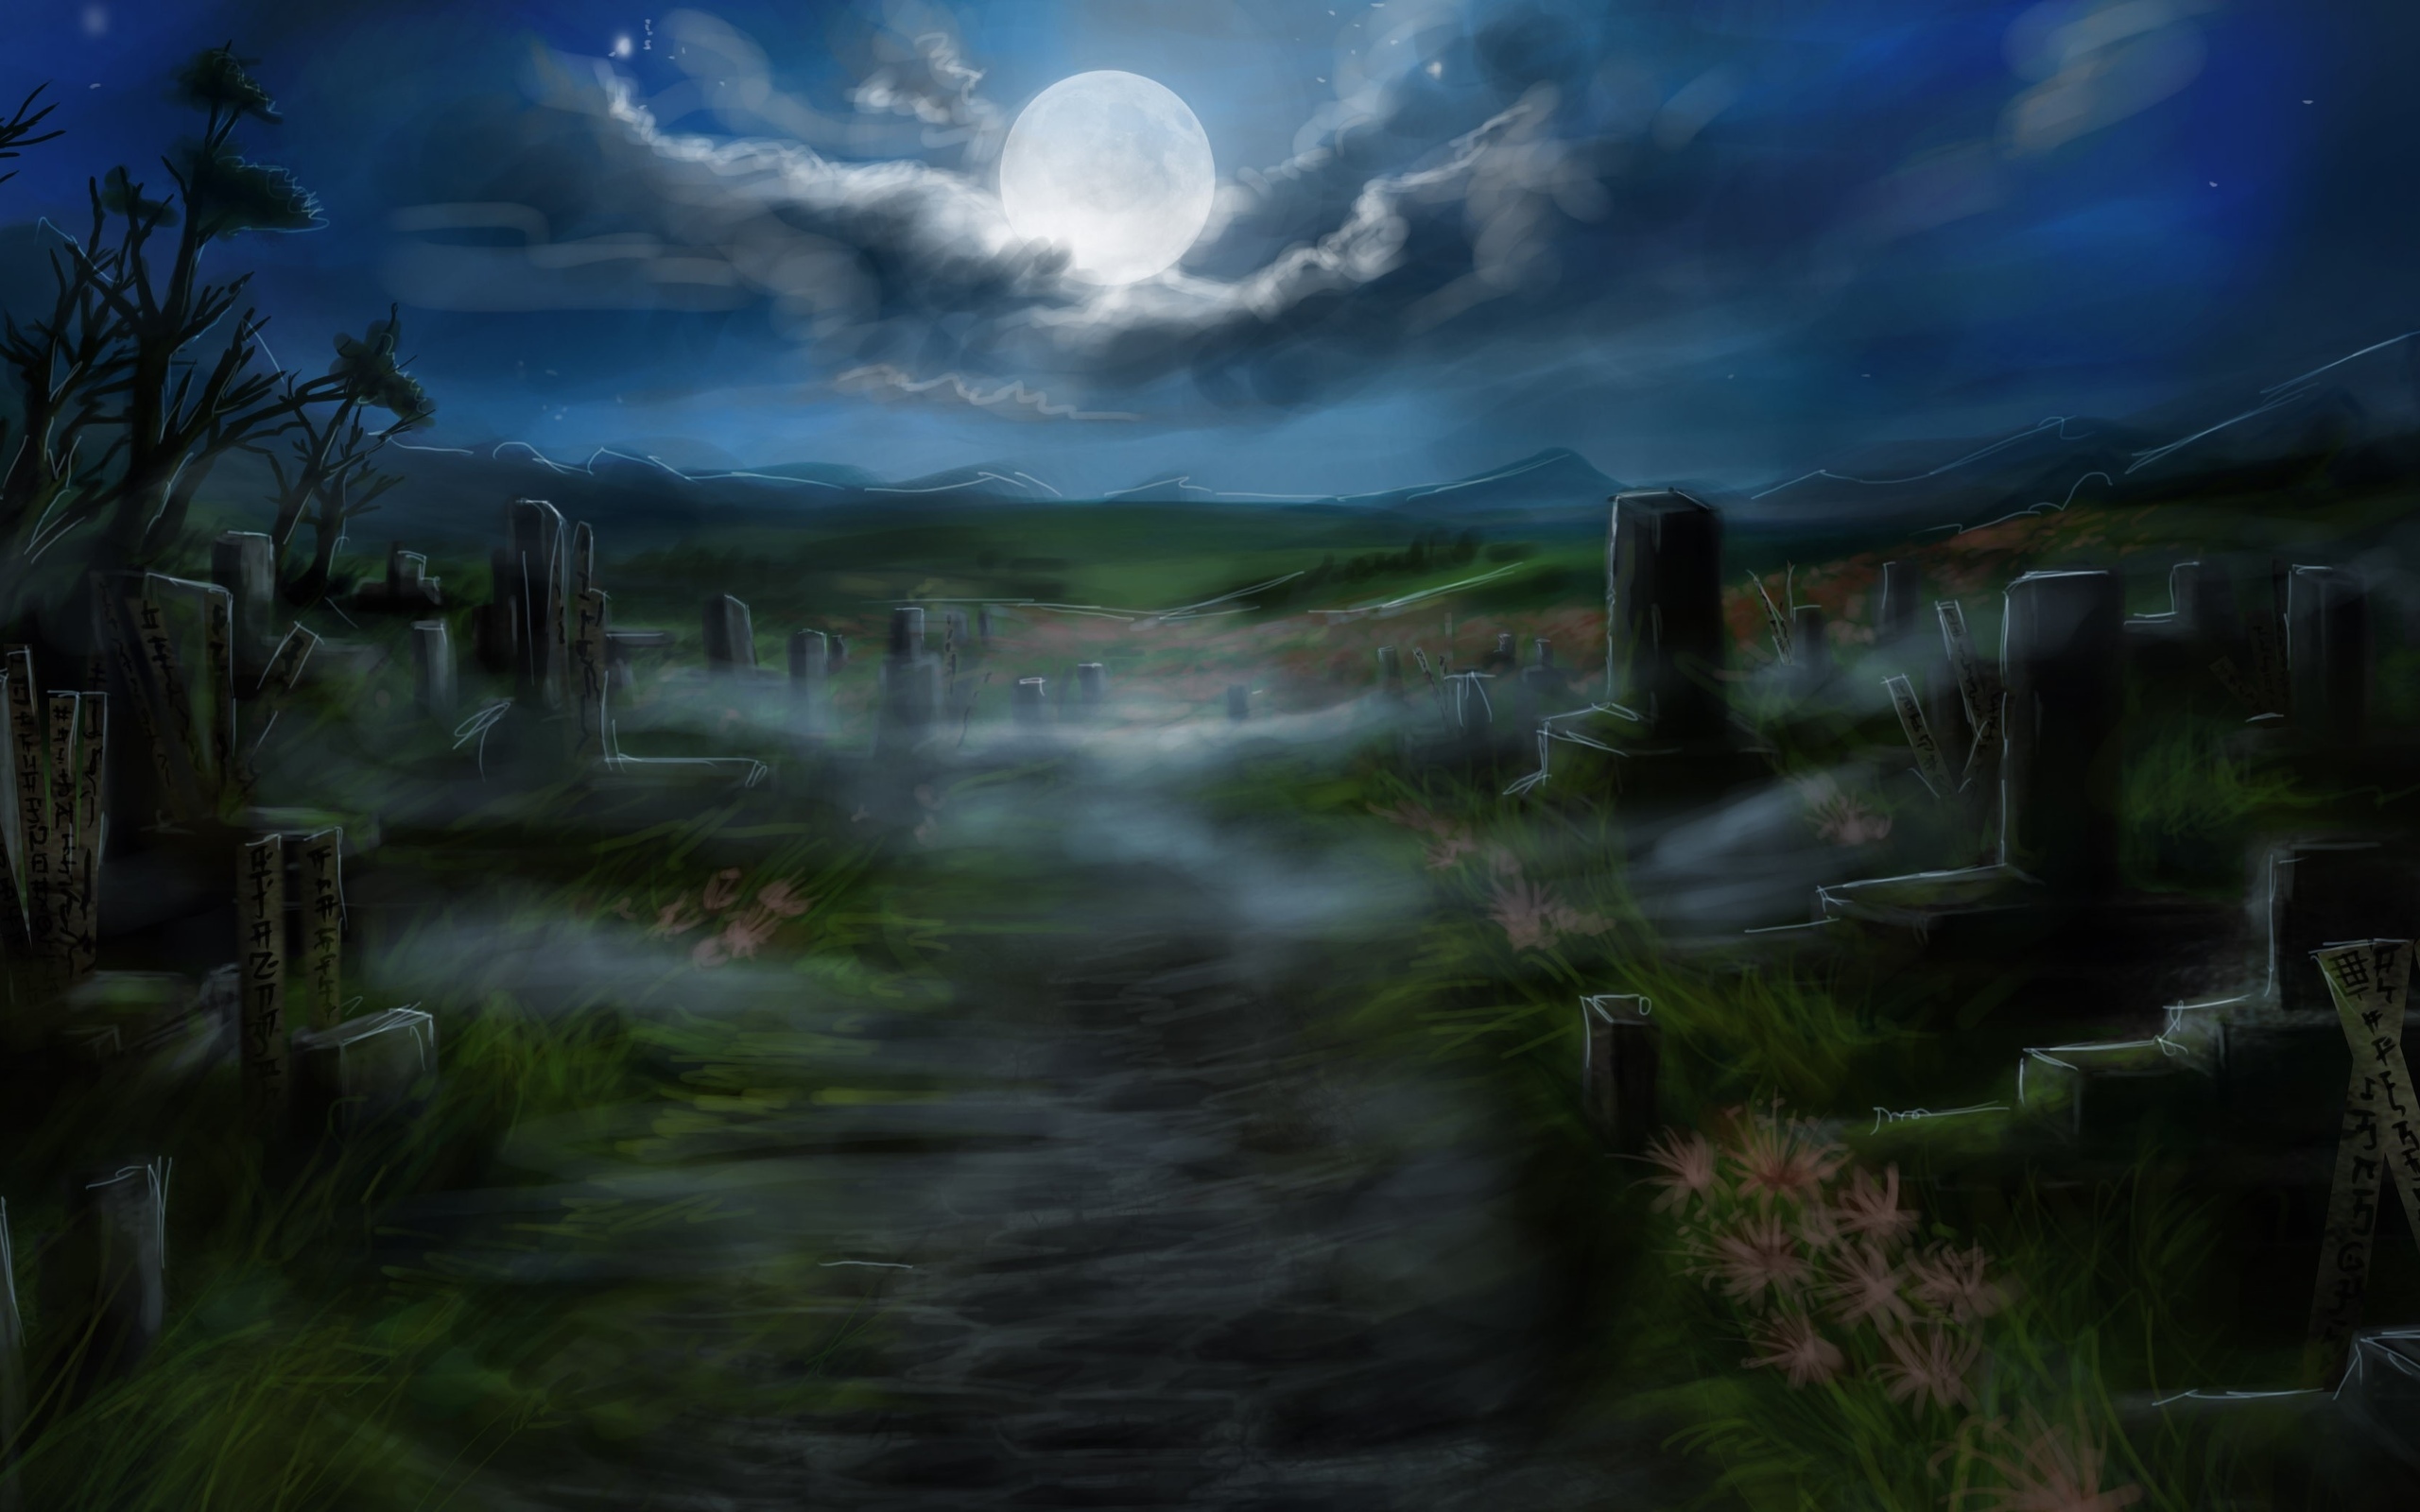 General 2560x1600 night Moon clouds cemetery artwork digital art